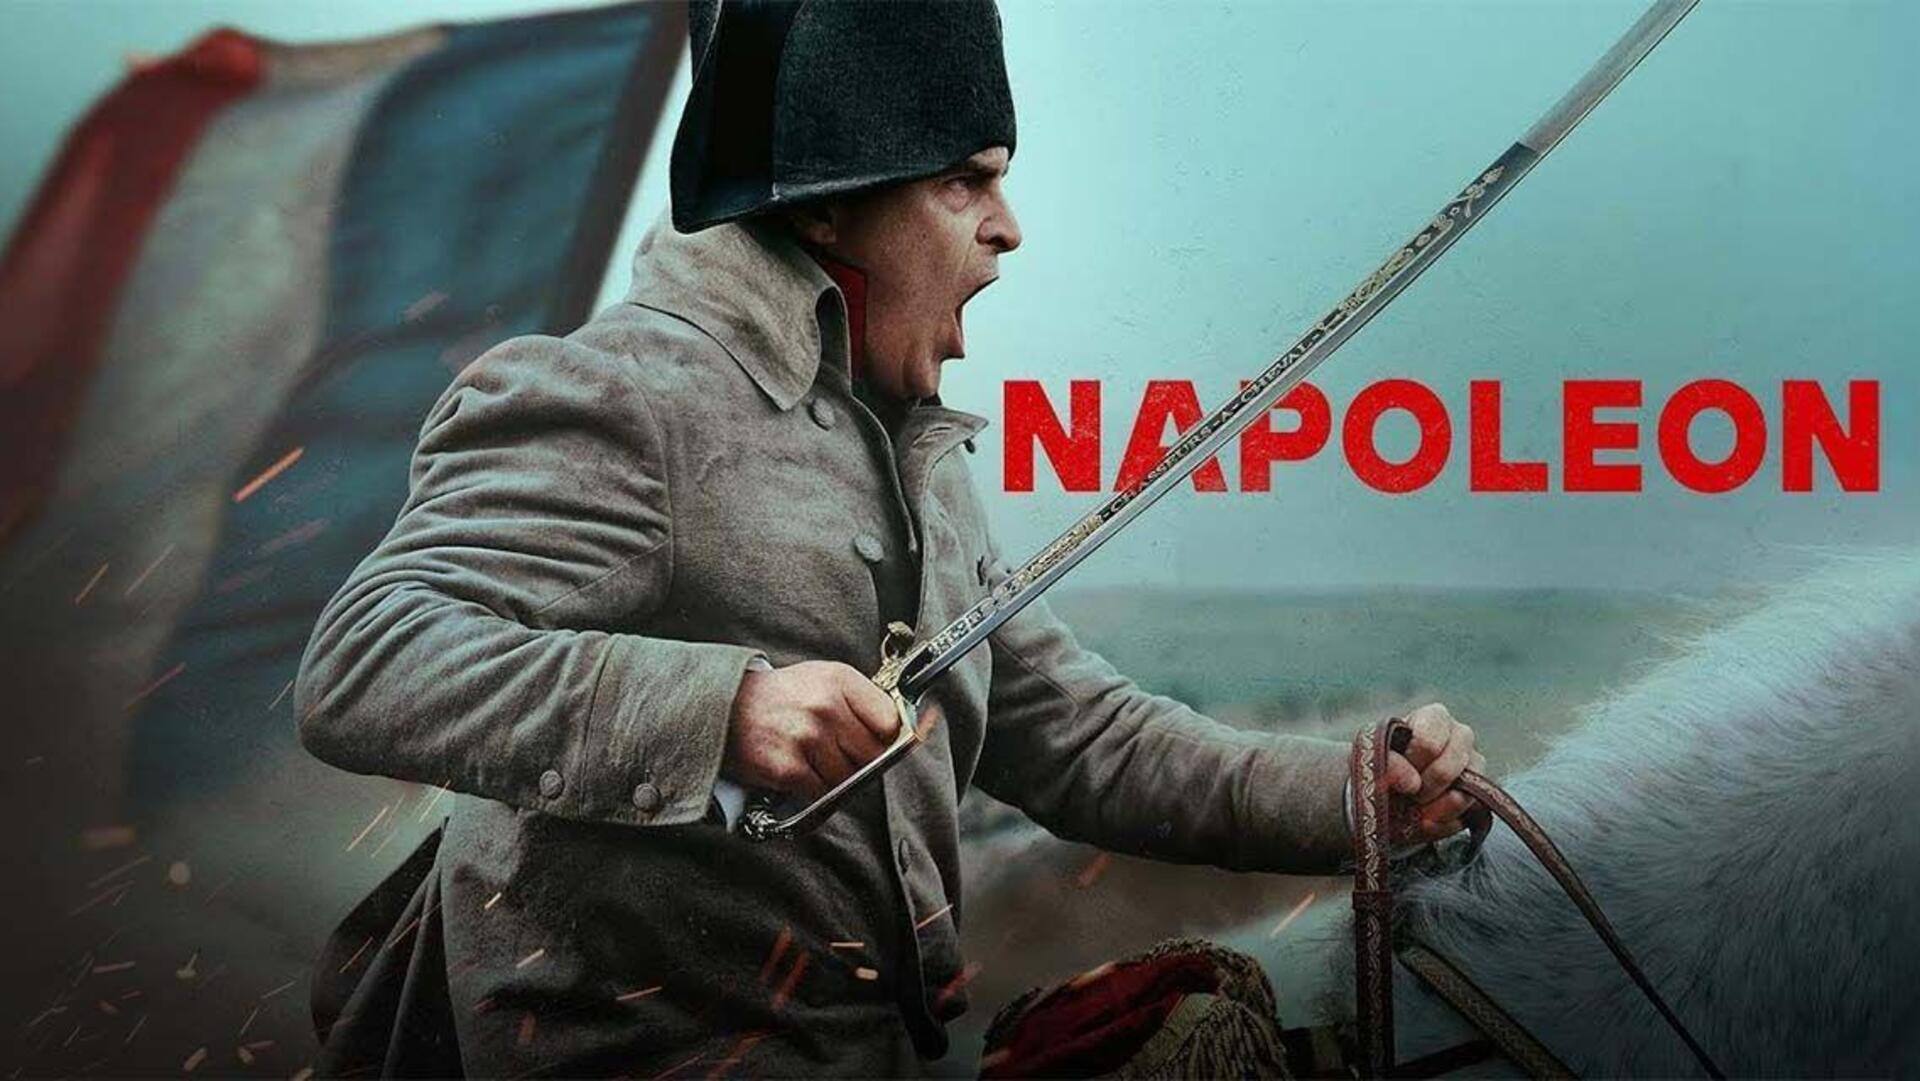 Box office: Joaquin Phoenix's 'Napoleon' earns just over Rs. 1cr